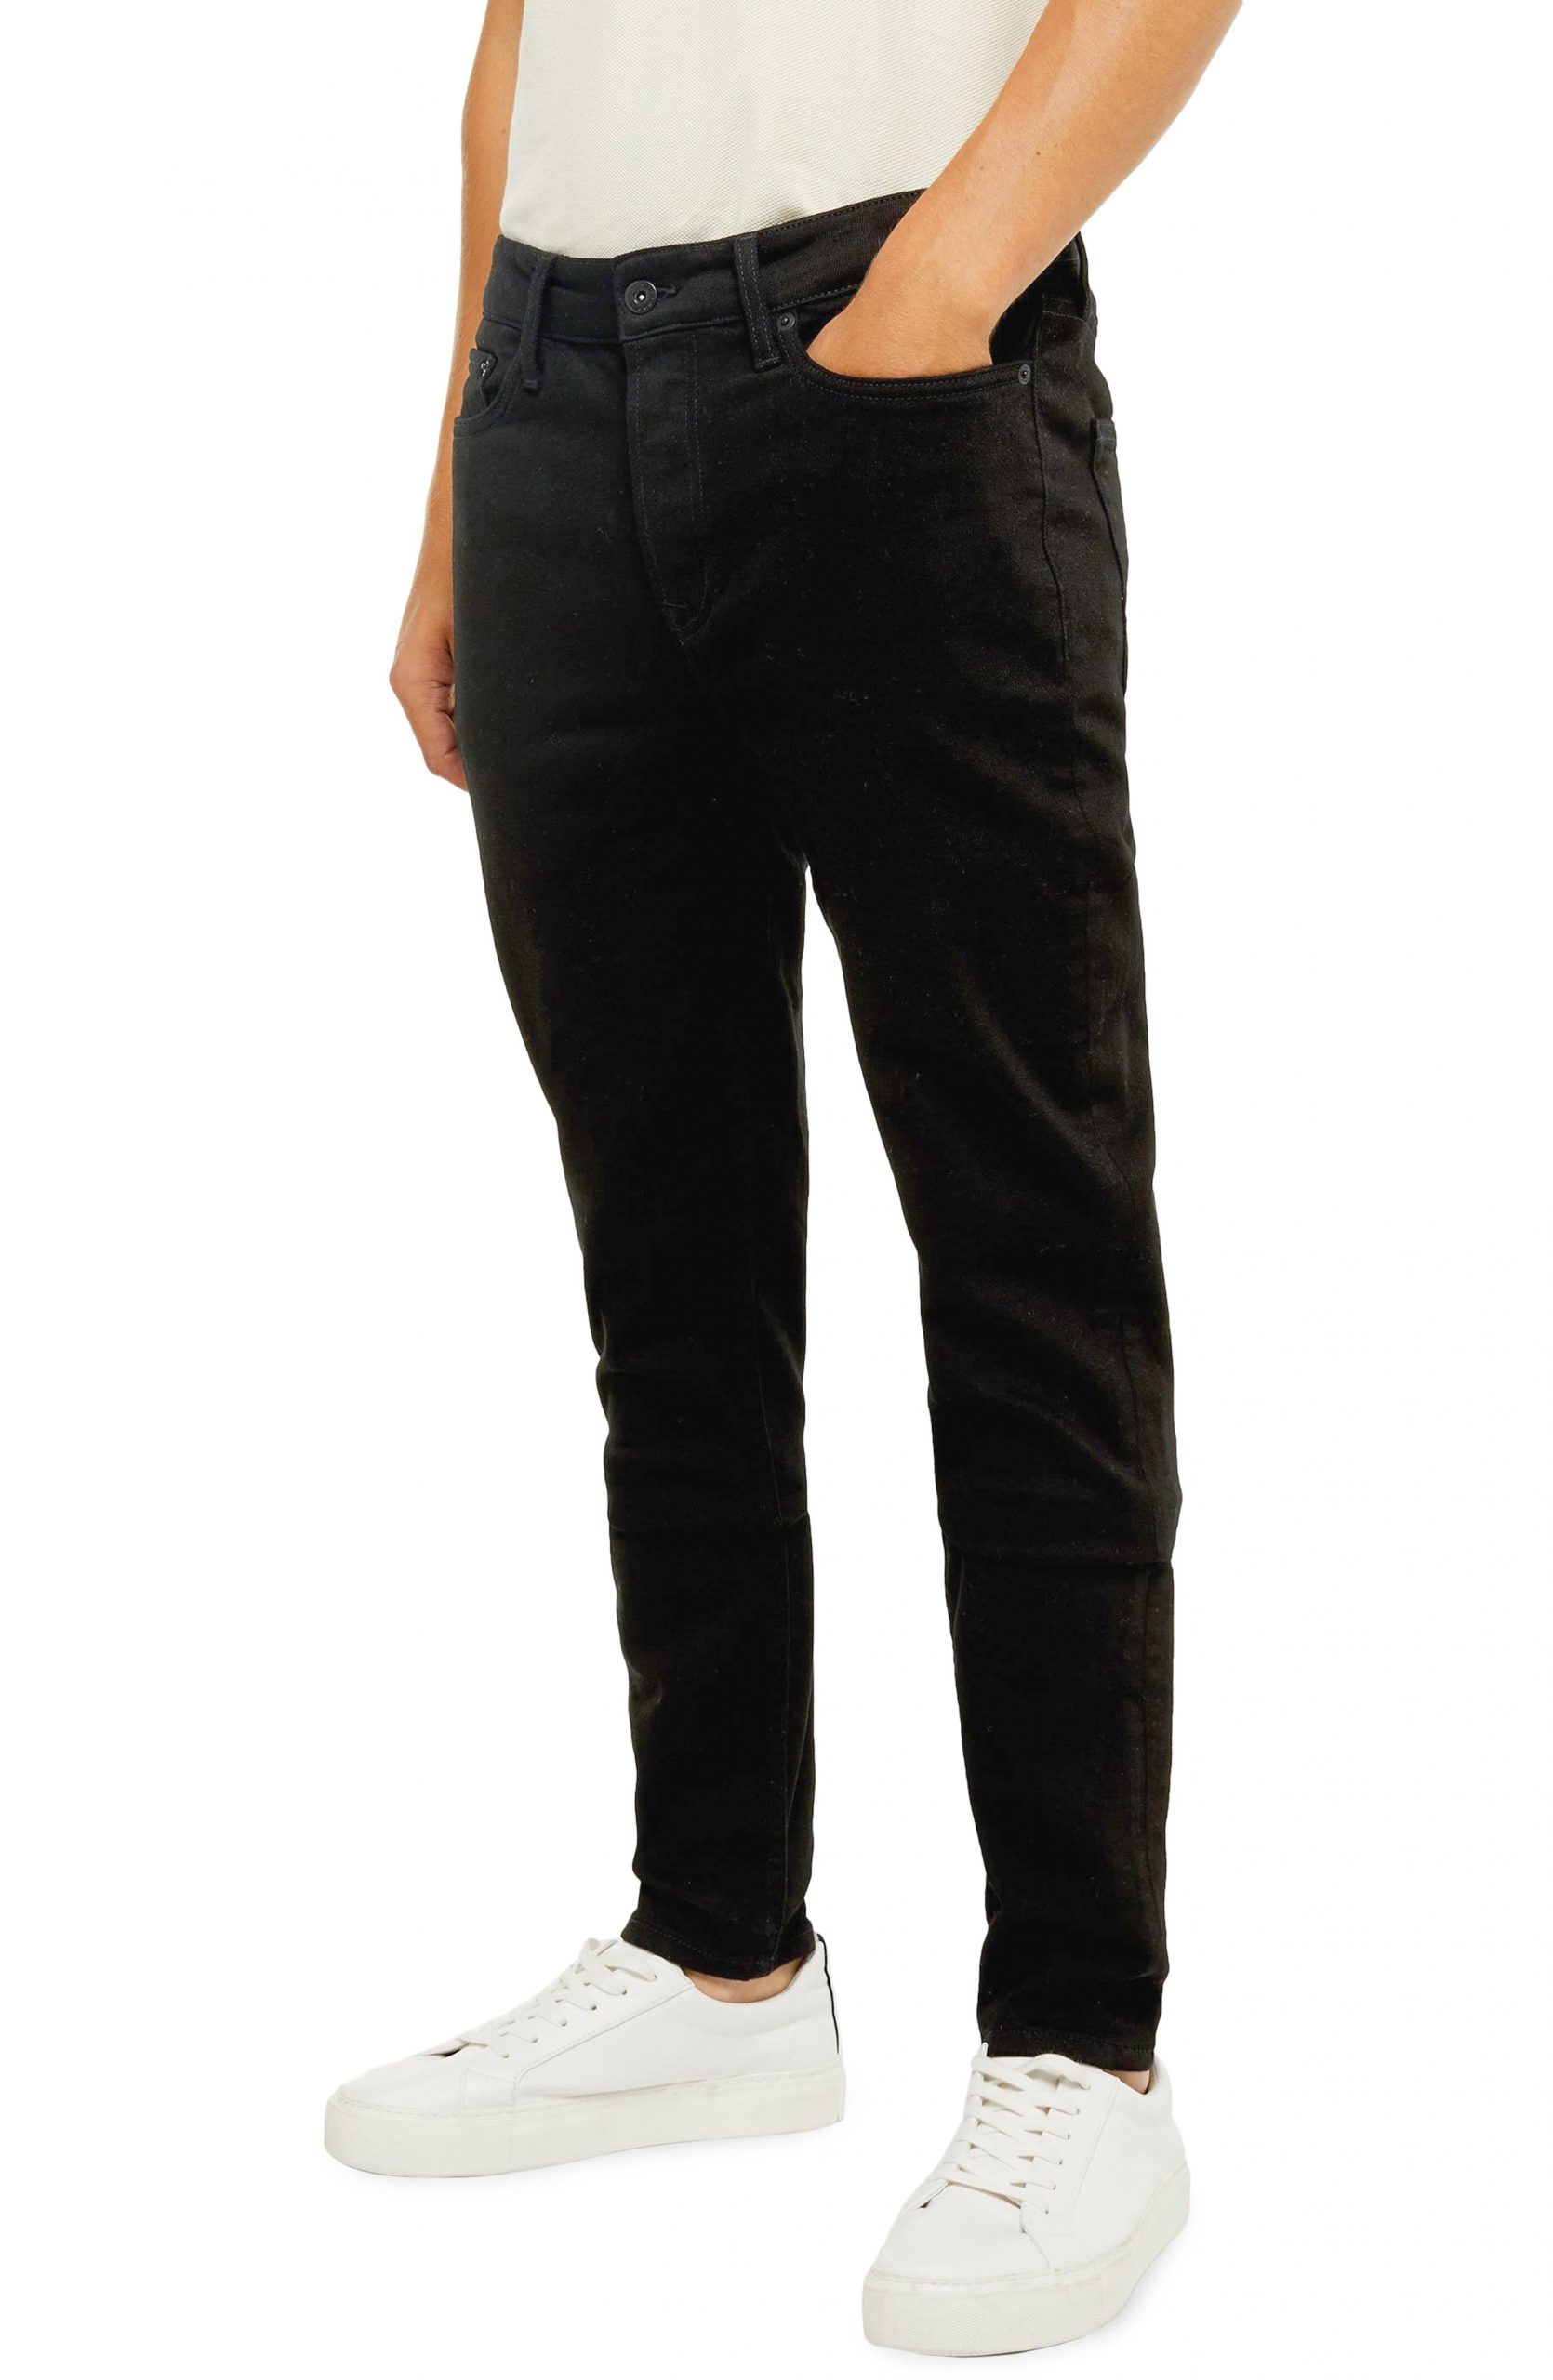 Men’s Topman Skinny Jeans, Size 30 x 32 - Black | The Fashionisto